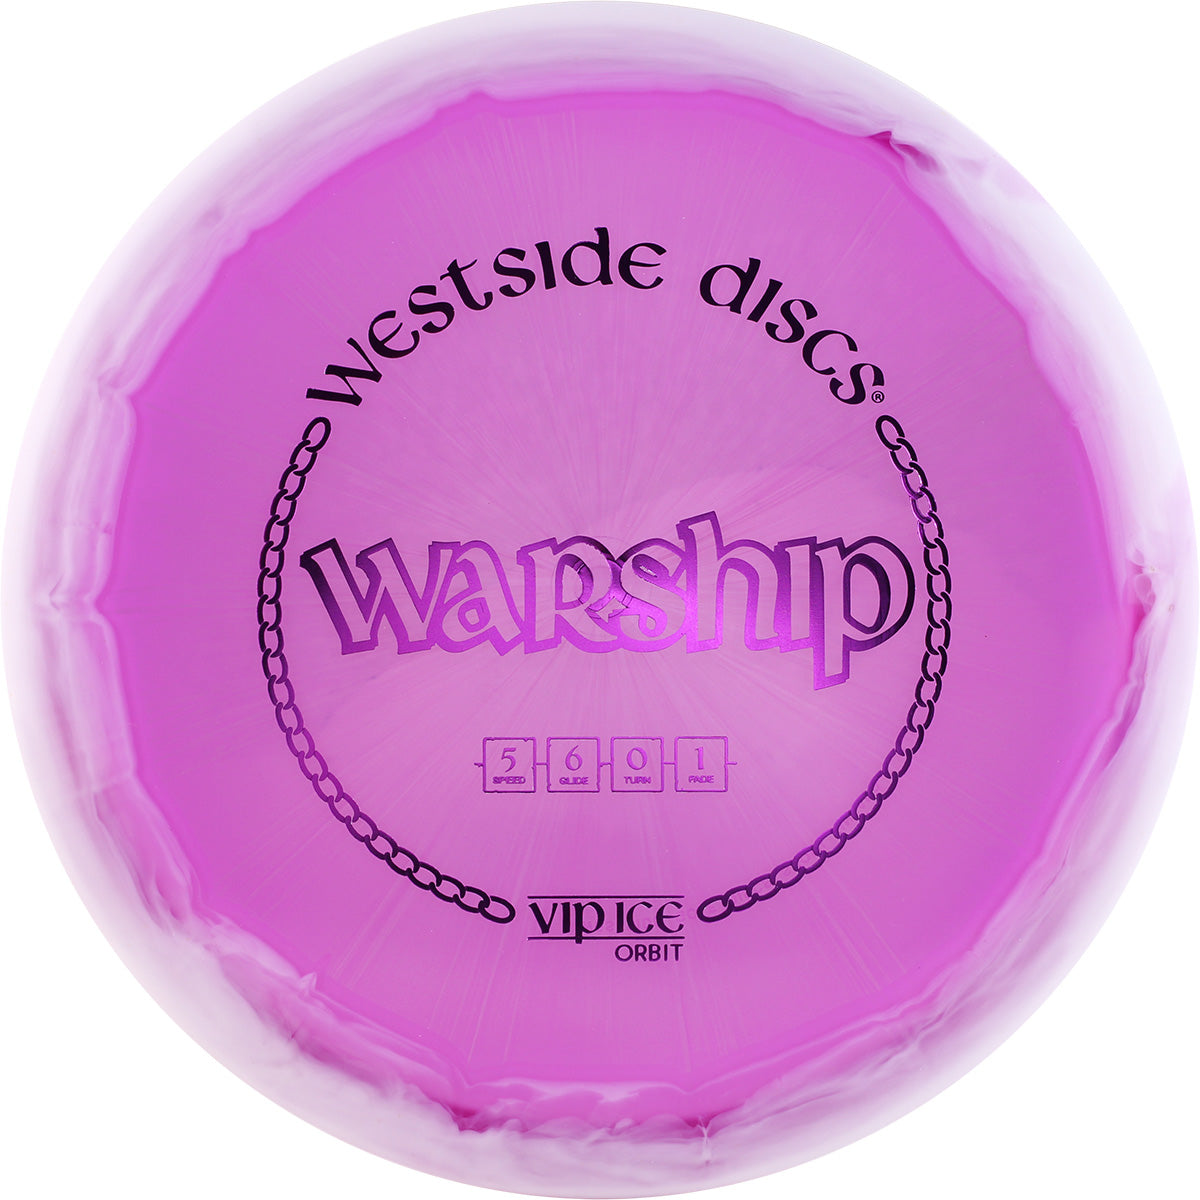 Westside Warship - Ice Orbit